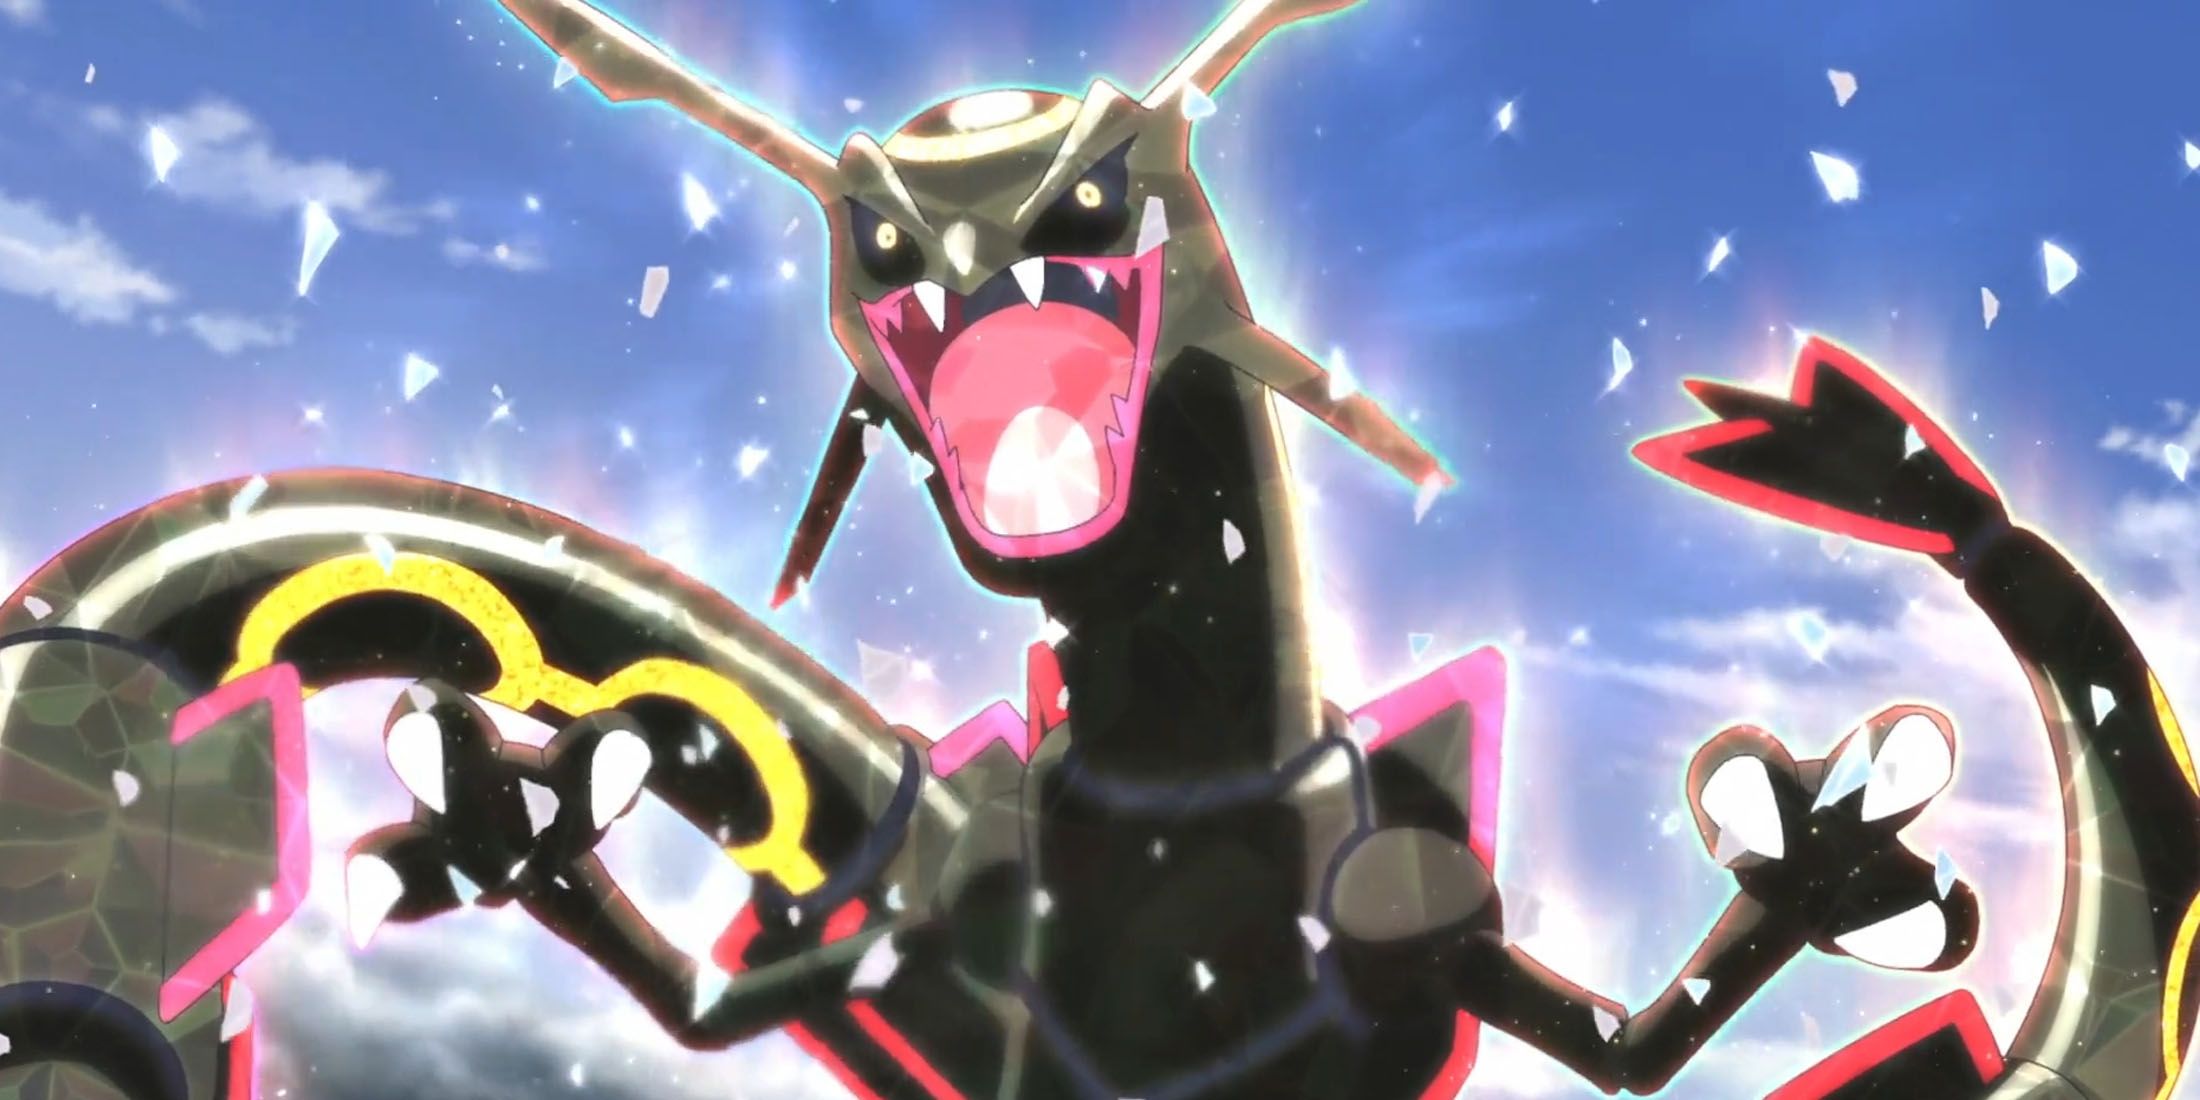 A screenshot of Shiny Rayquaza in the Pokemon anime.